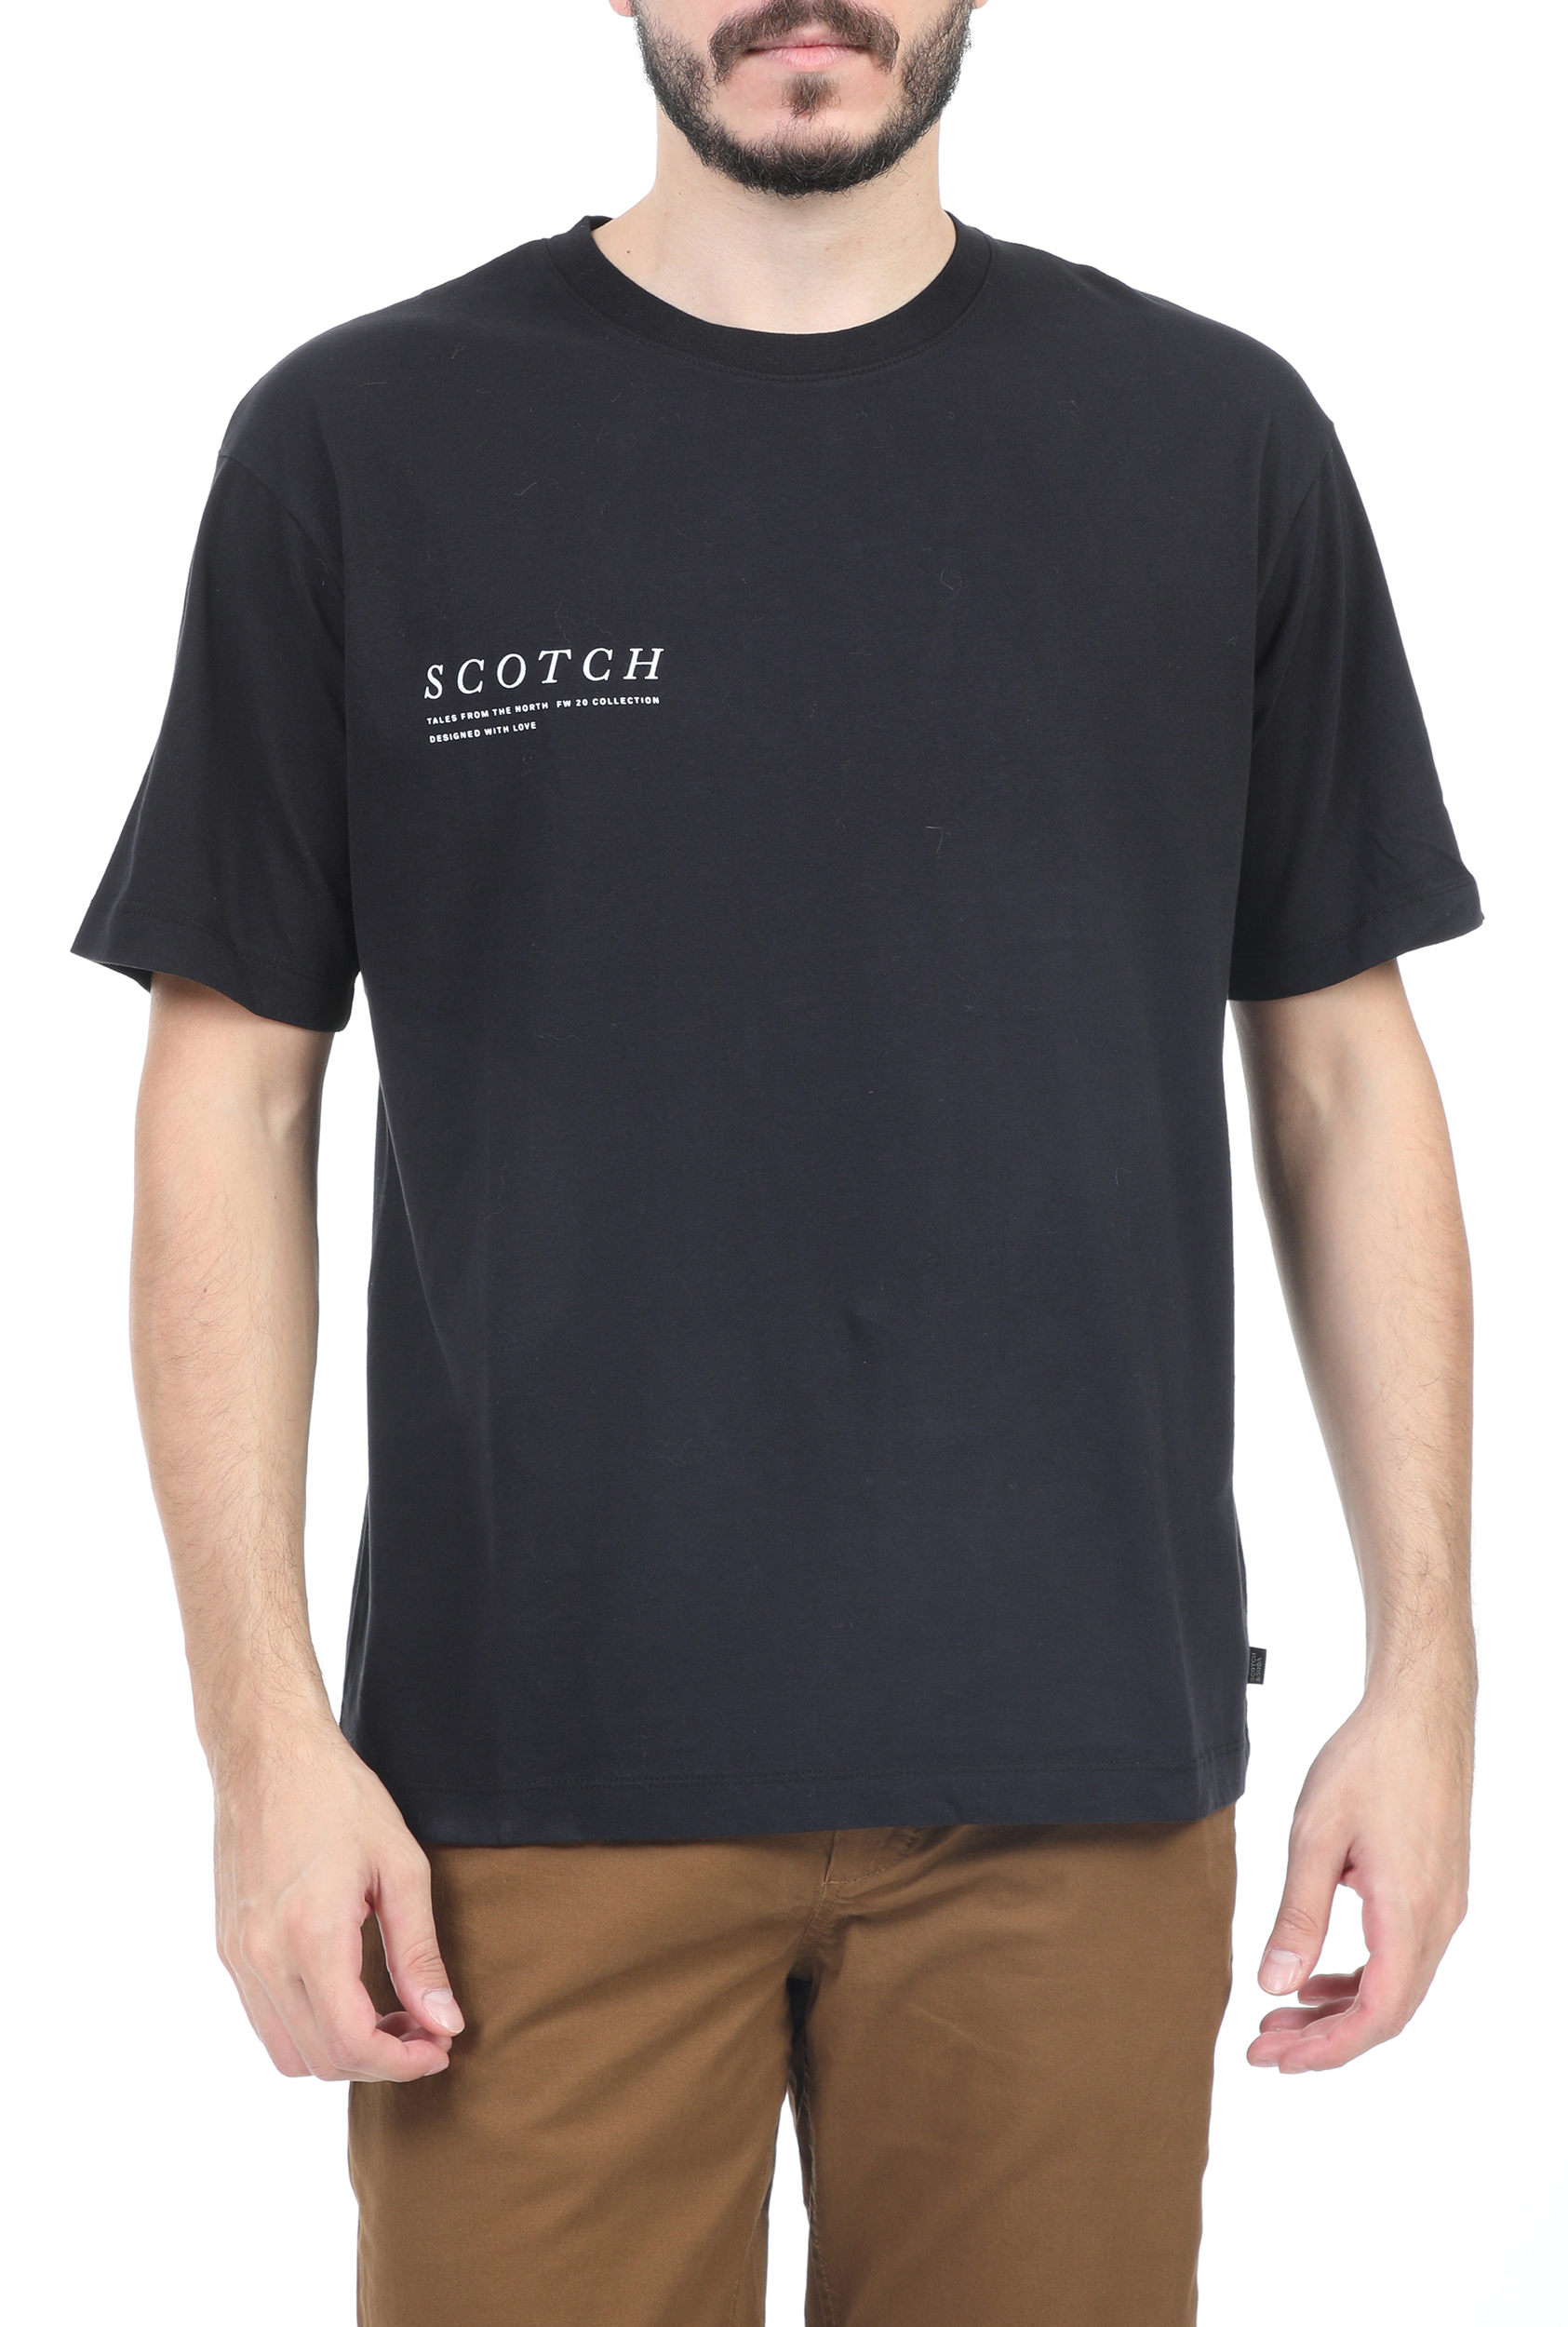 SCOTCH & SODA SCOTCH & SODA - Ανδρικό t-shirt SCOTCH & SODA μαύρο